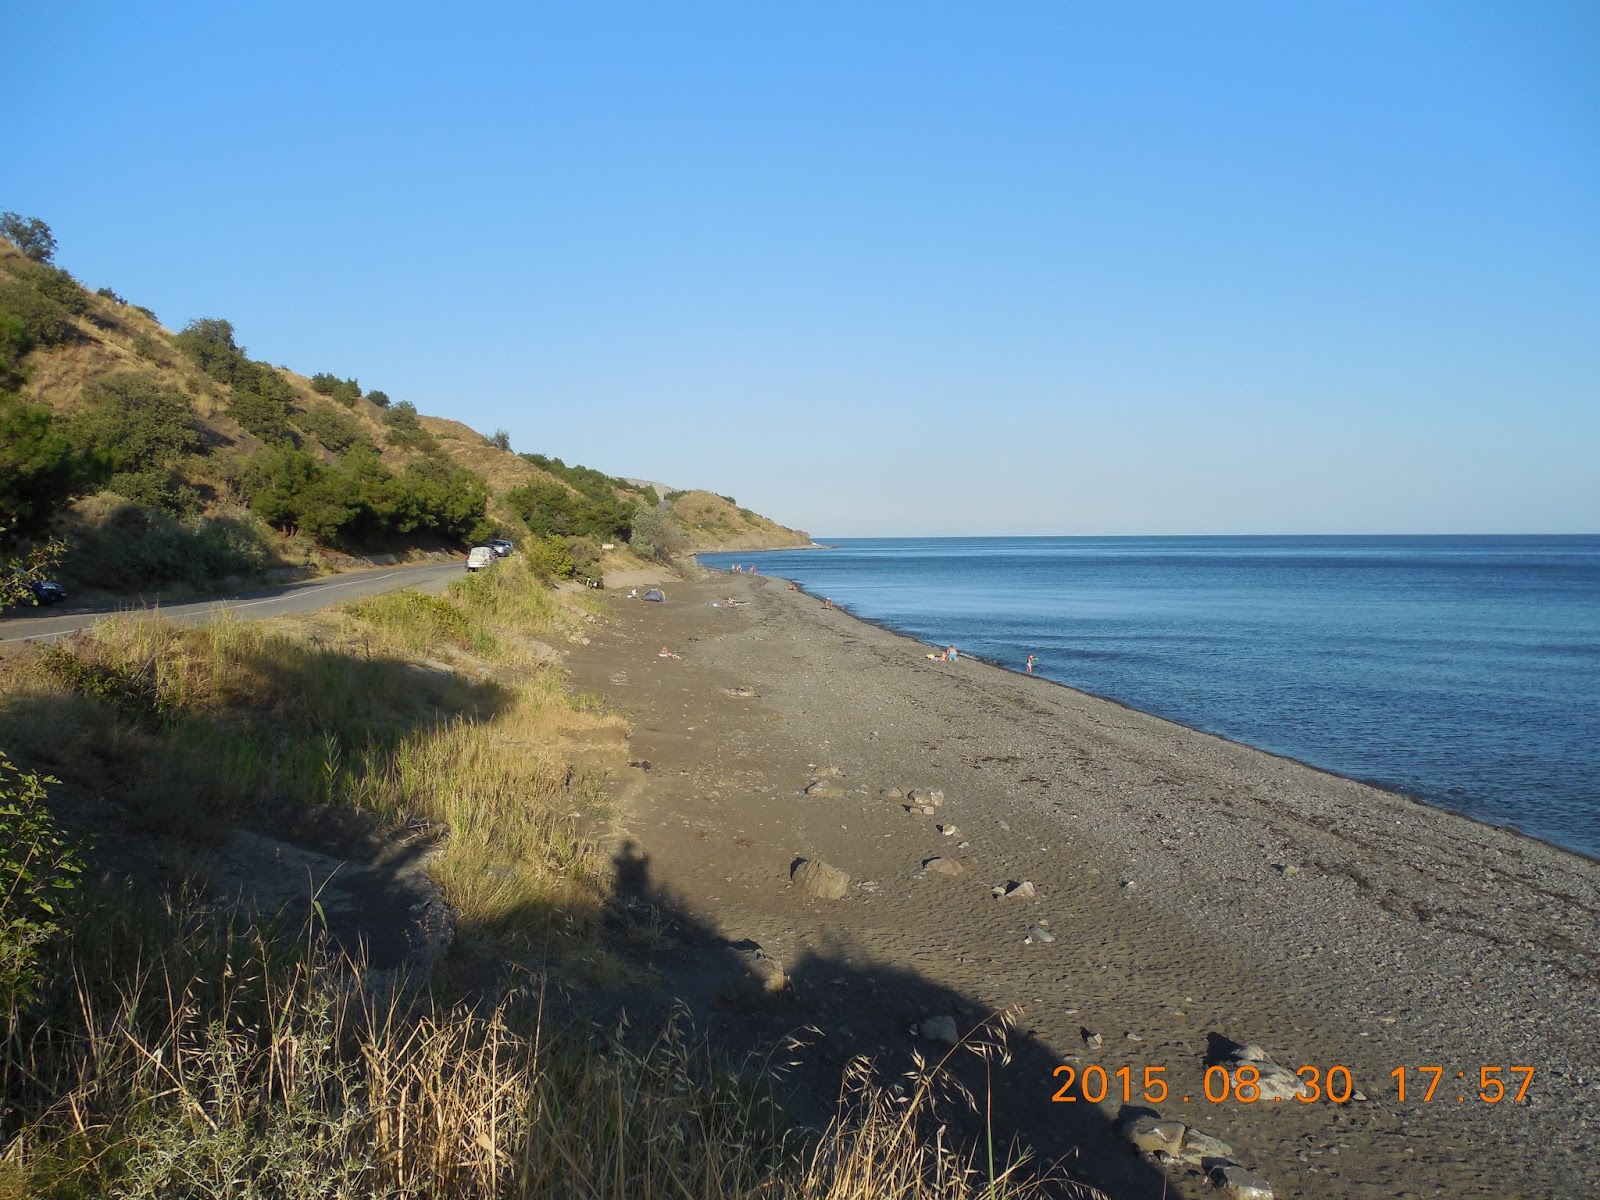 Foto de Morskoe wild beach con guijarro gris superficie